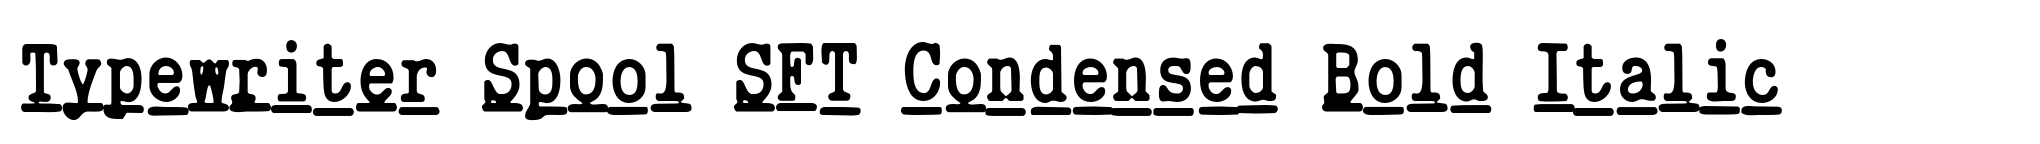 Typewriter Spool SFT Condensed Bold Italic image